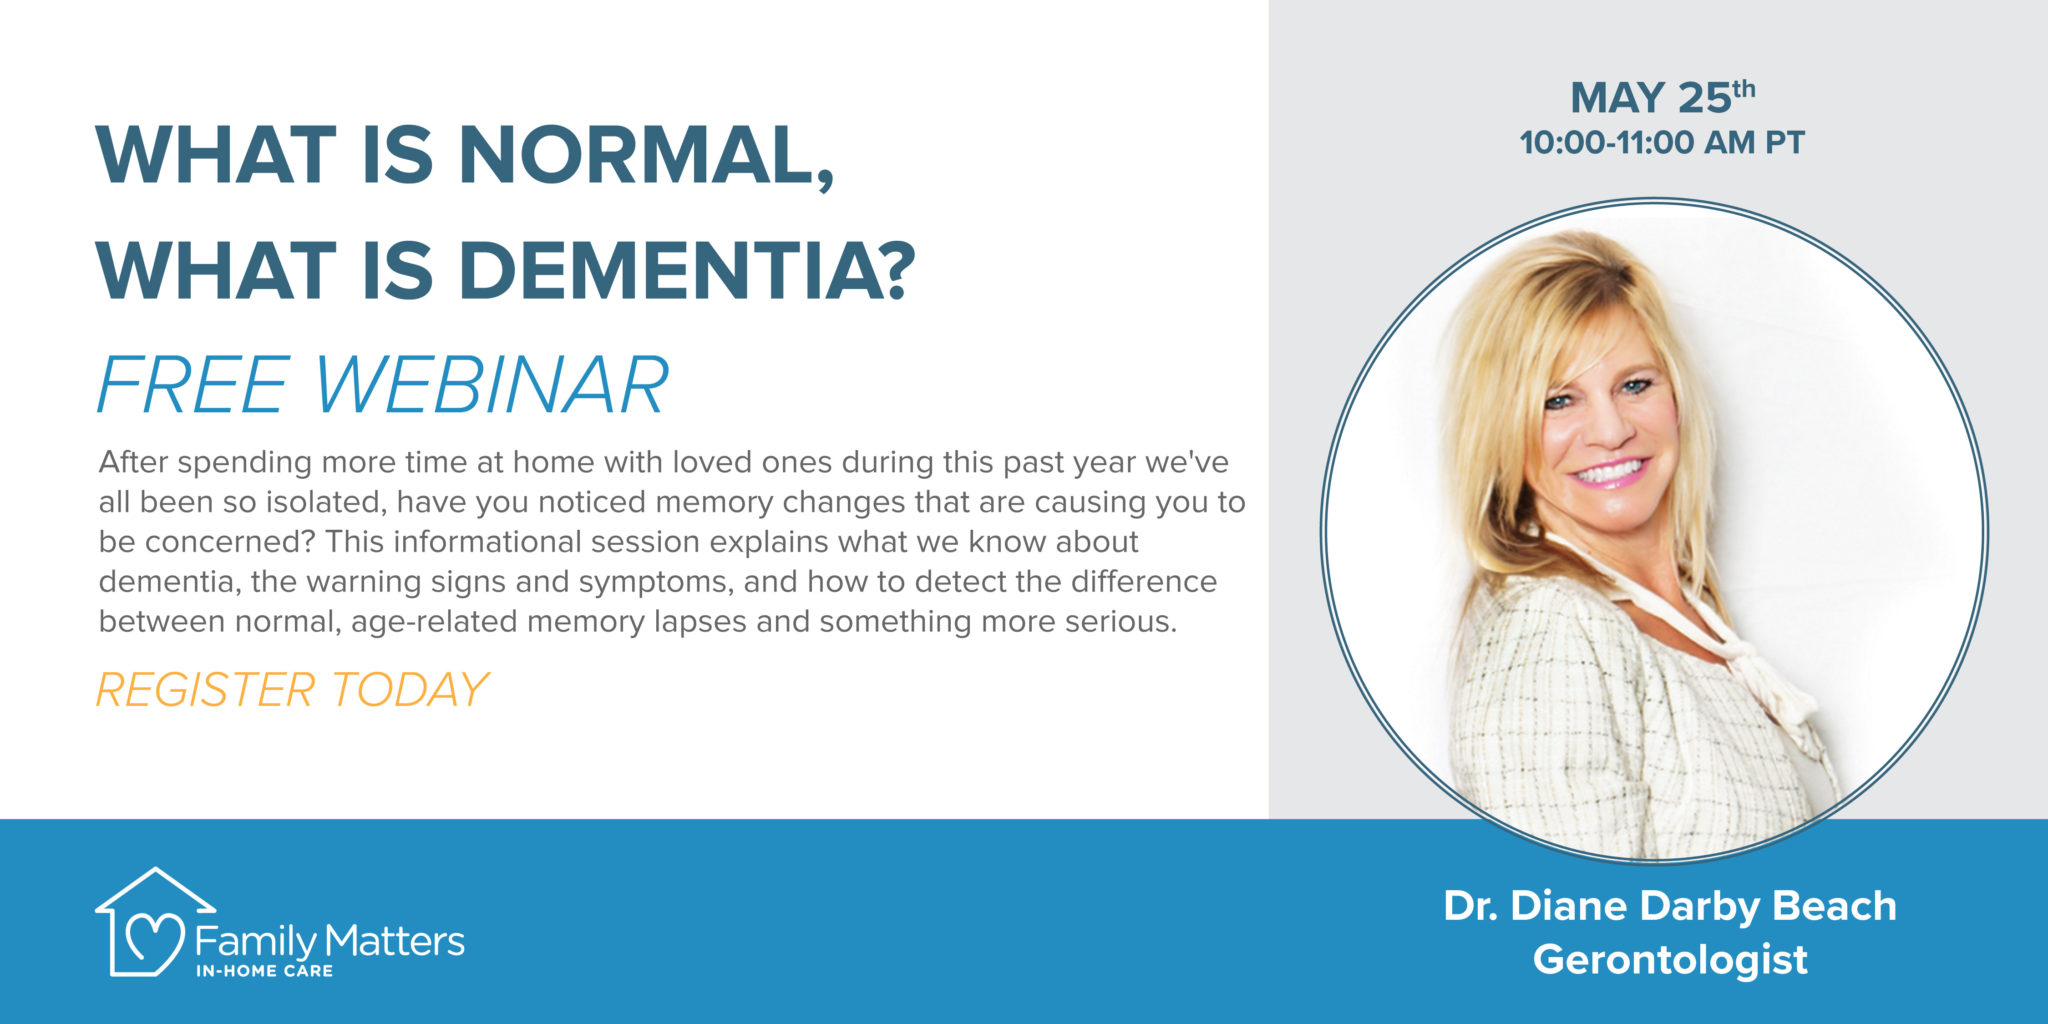 Free Webinar: What Is Normal, What Is Dementia?